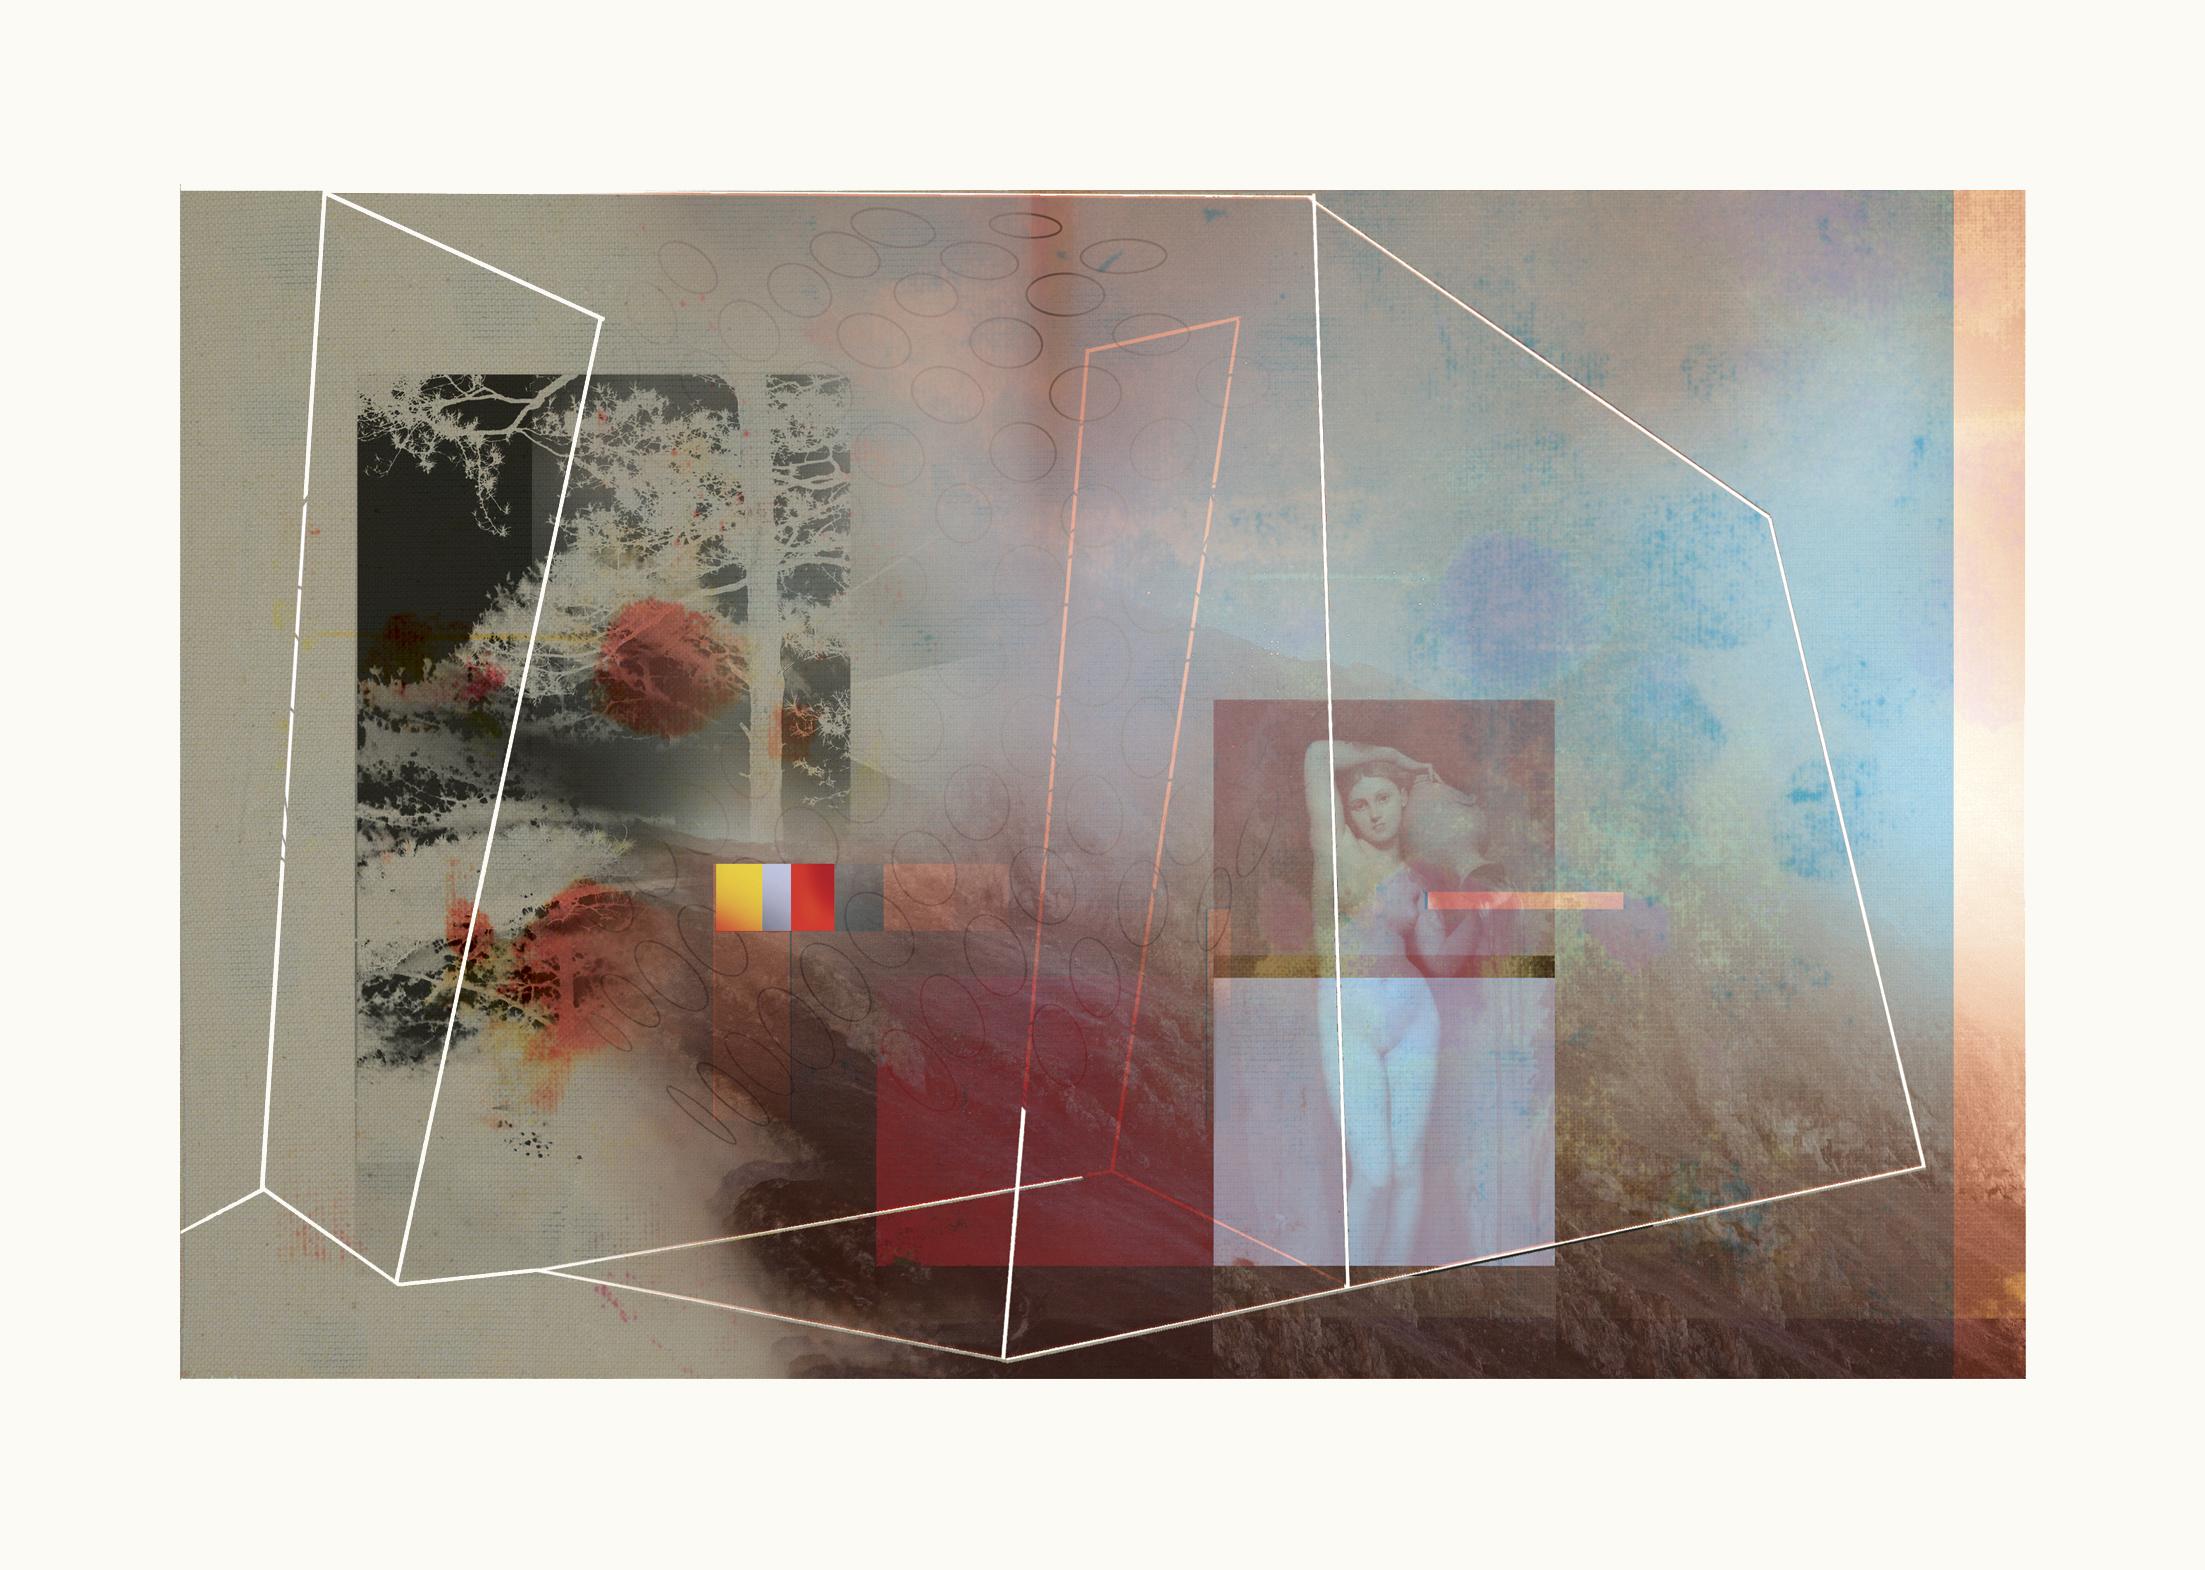 Francisco Nicolás Abstract Print - Casa 3 - Contemporary, Abstract, Pop art, Surrealist, geometric, landscape 